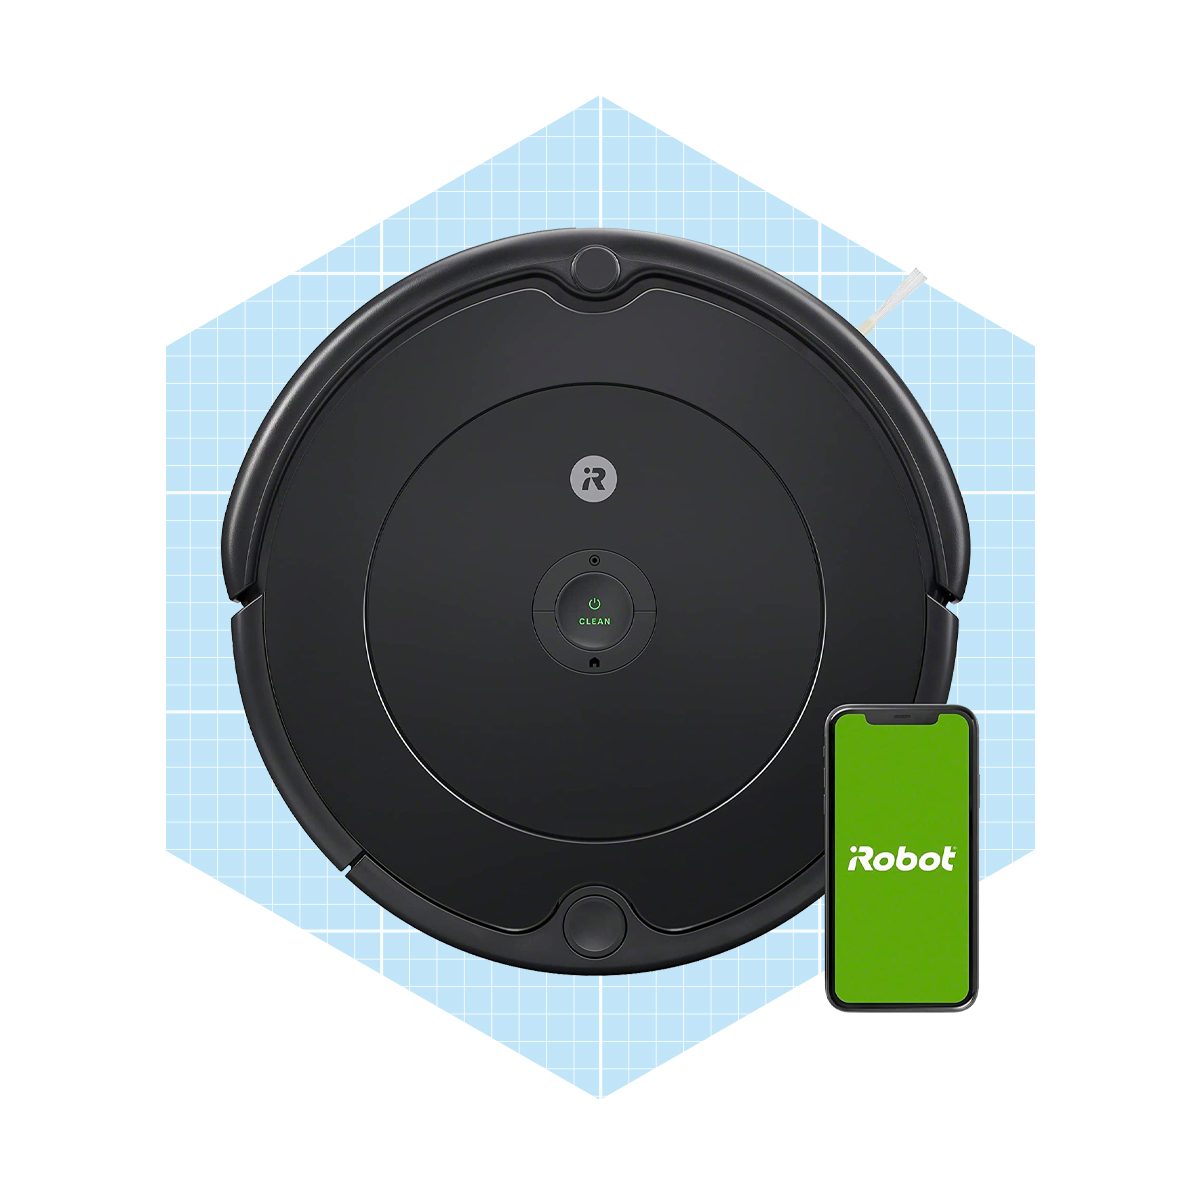 Irobot Roomba 692 Robot Vacuum Ecomm Amazon.com